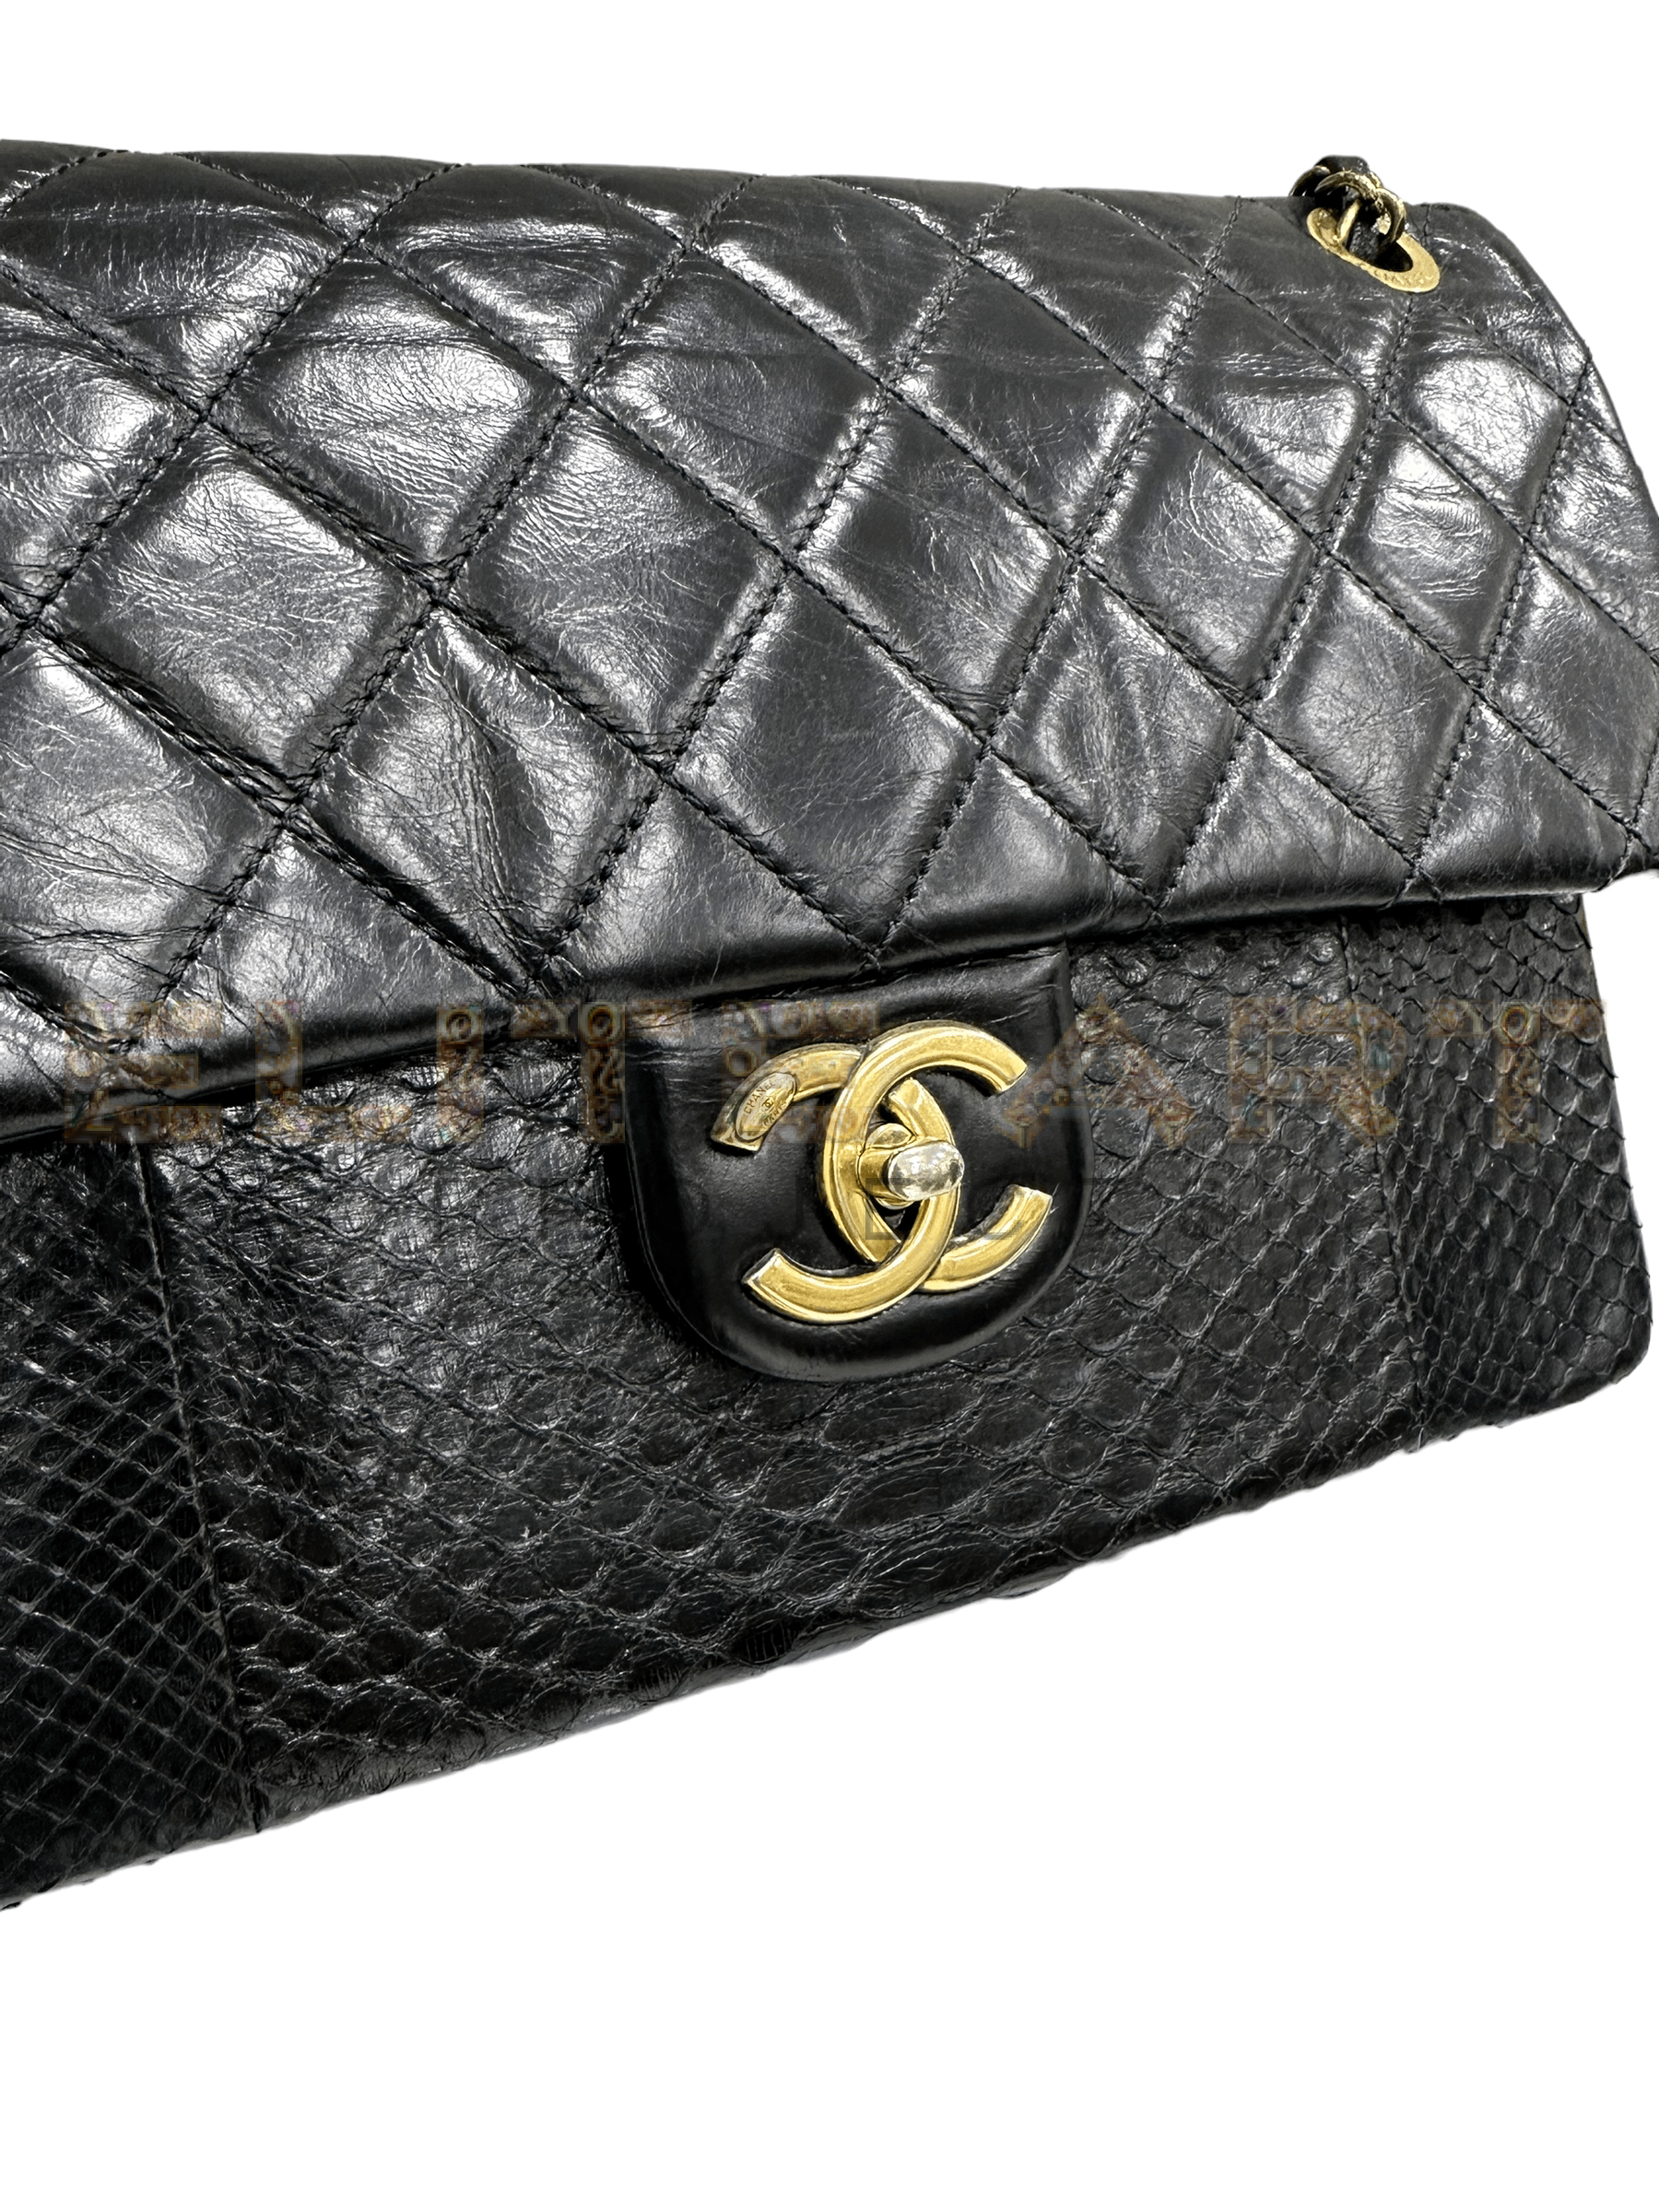 Chanel, Urban Mix, black leather, python inserts, gold-tone hardware, CC logo twist lock closure, burgundy fabric-lined interior, versatile wear, zip pocket, 2015/16 production, good condition, ELS Fashion TV, Elite Art Projects